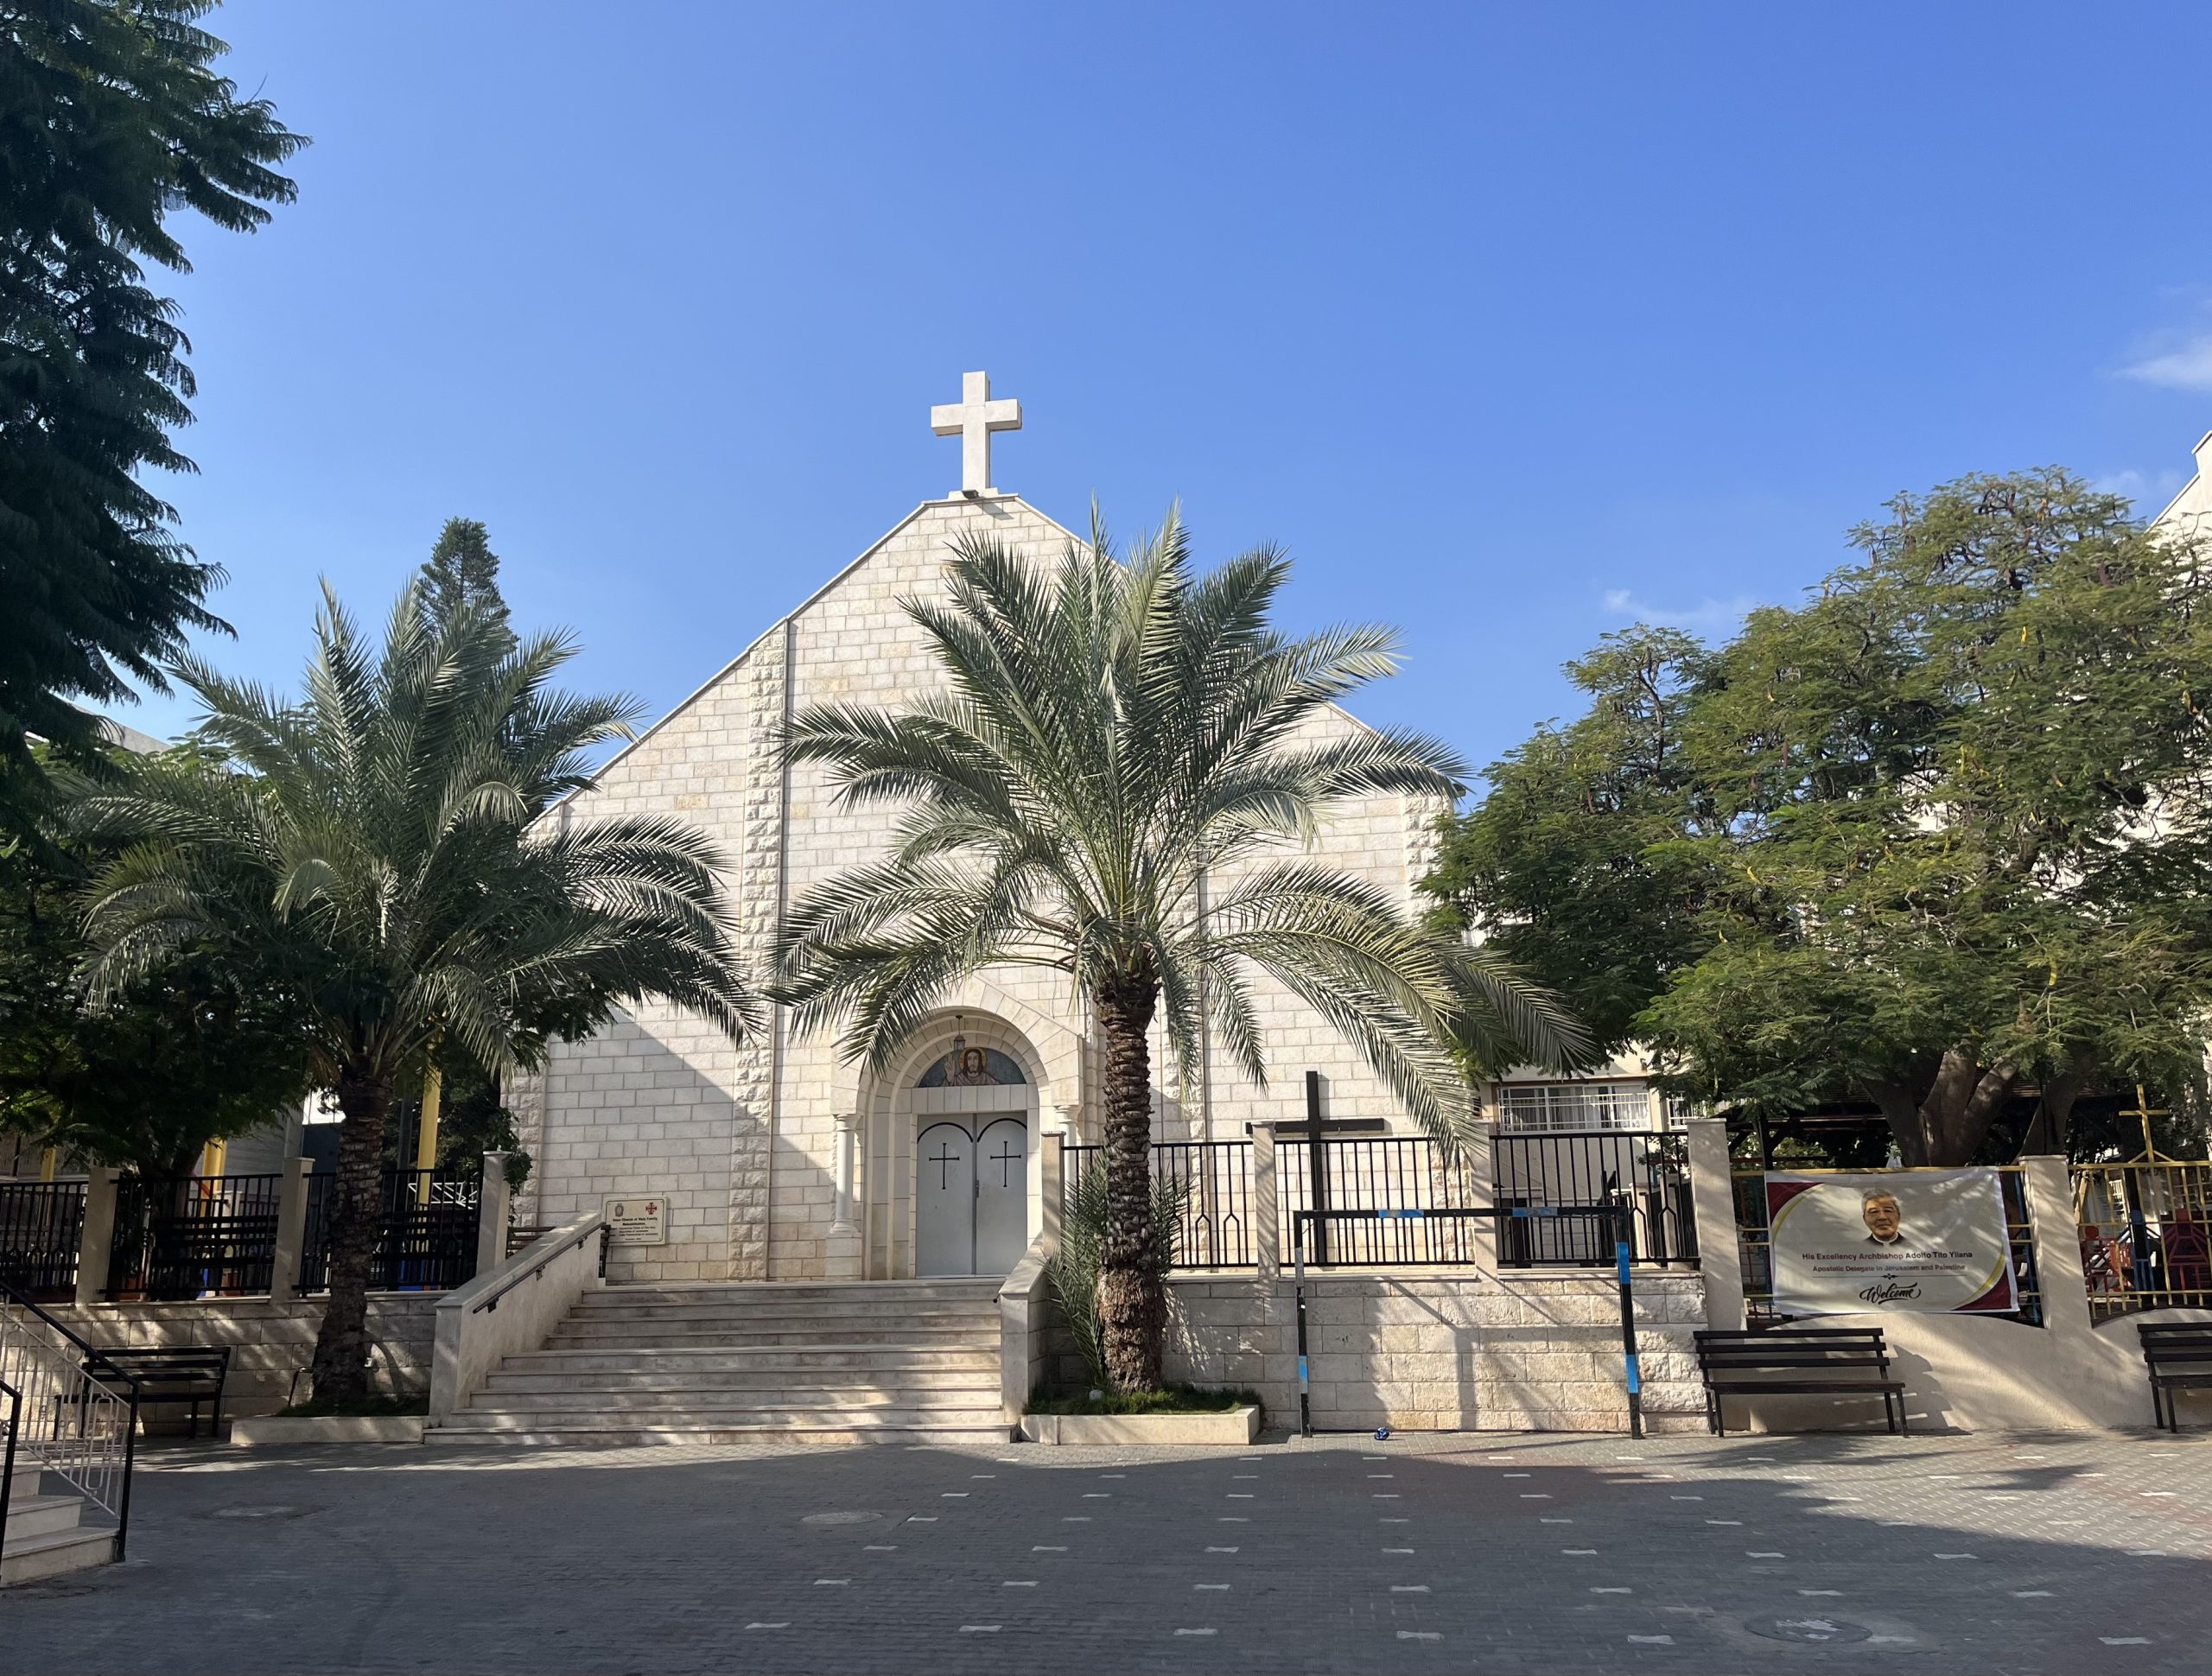 Bild: Dan Palraz, Holy Family Church in Gaza, CC BY-SA 4.0, via Wikimedia Commons, (keine Änderungen vorgenommen)